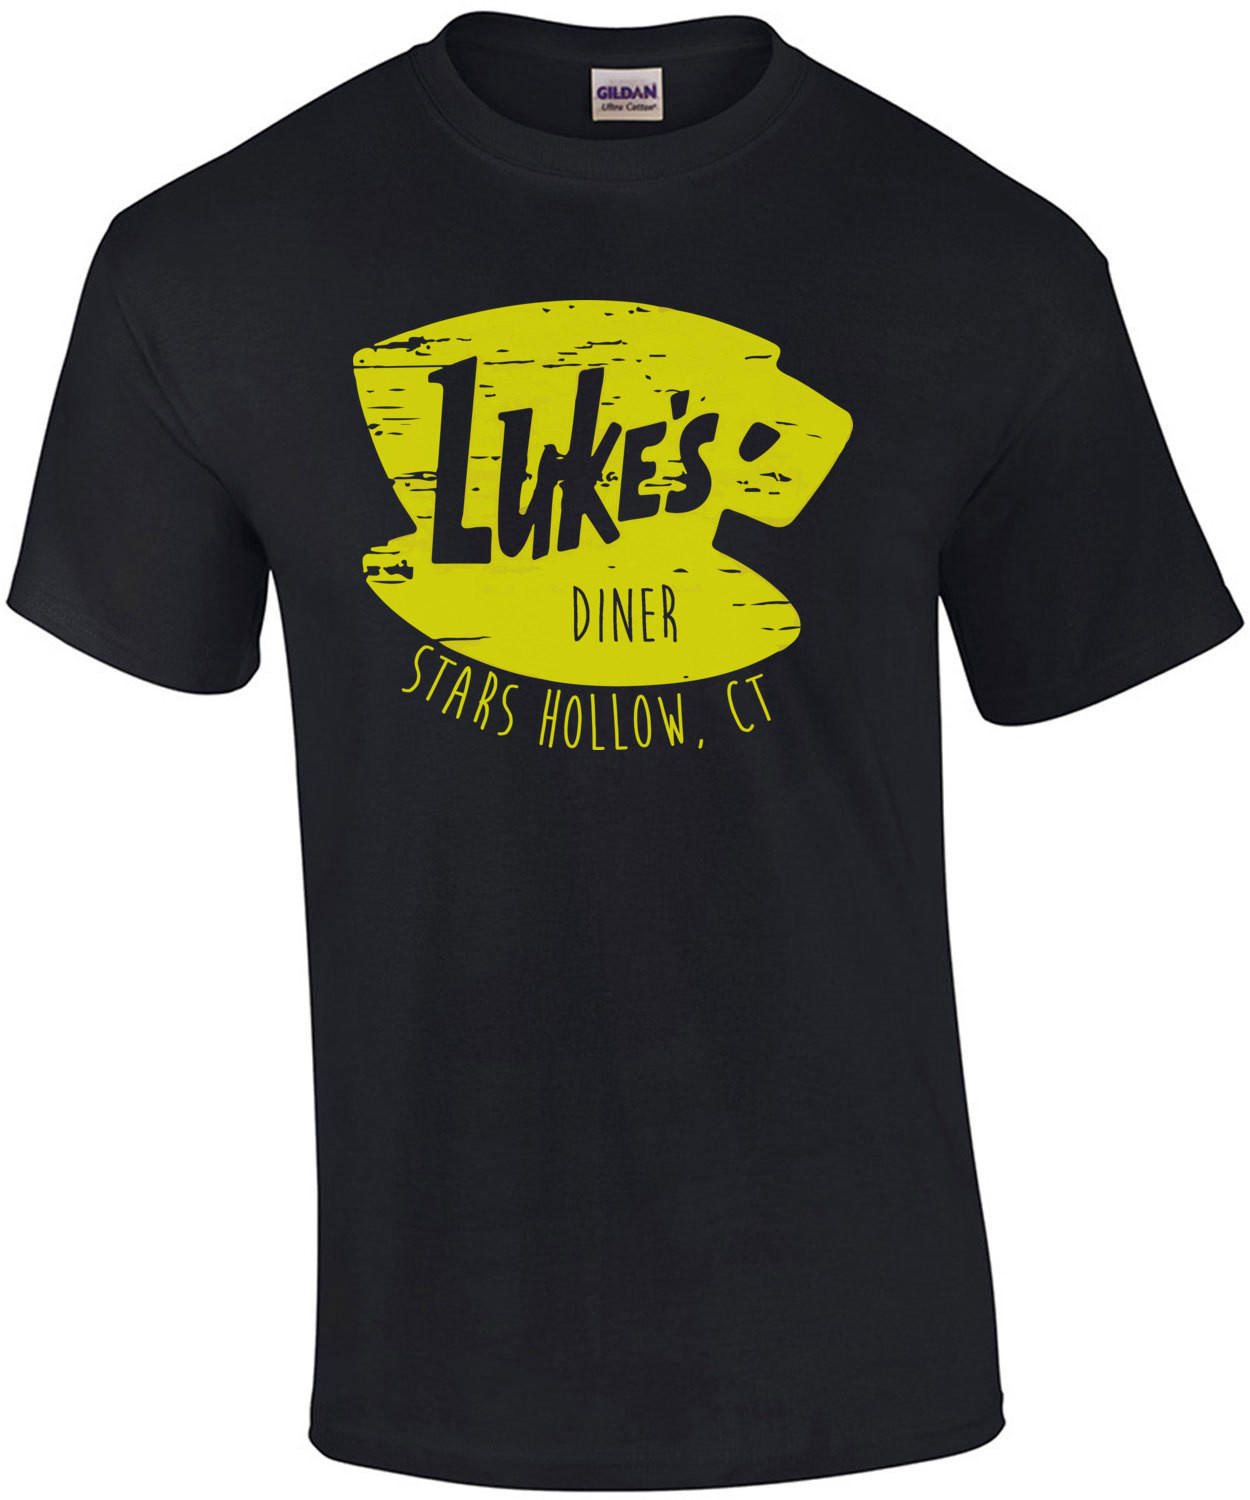 Luke's Diner Stars Hallow, CT Gilmore Girls t-shirt